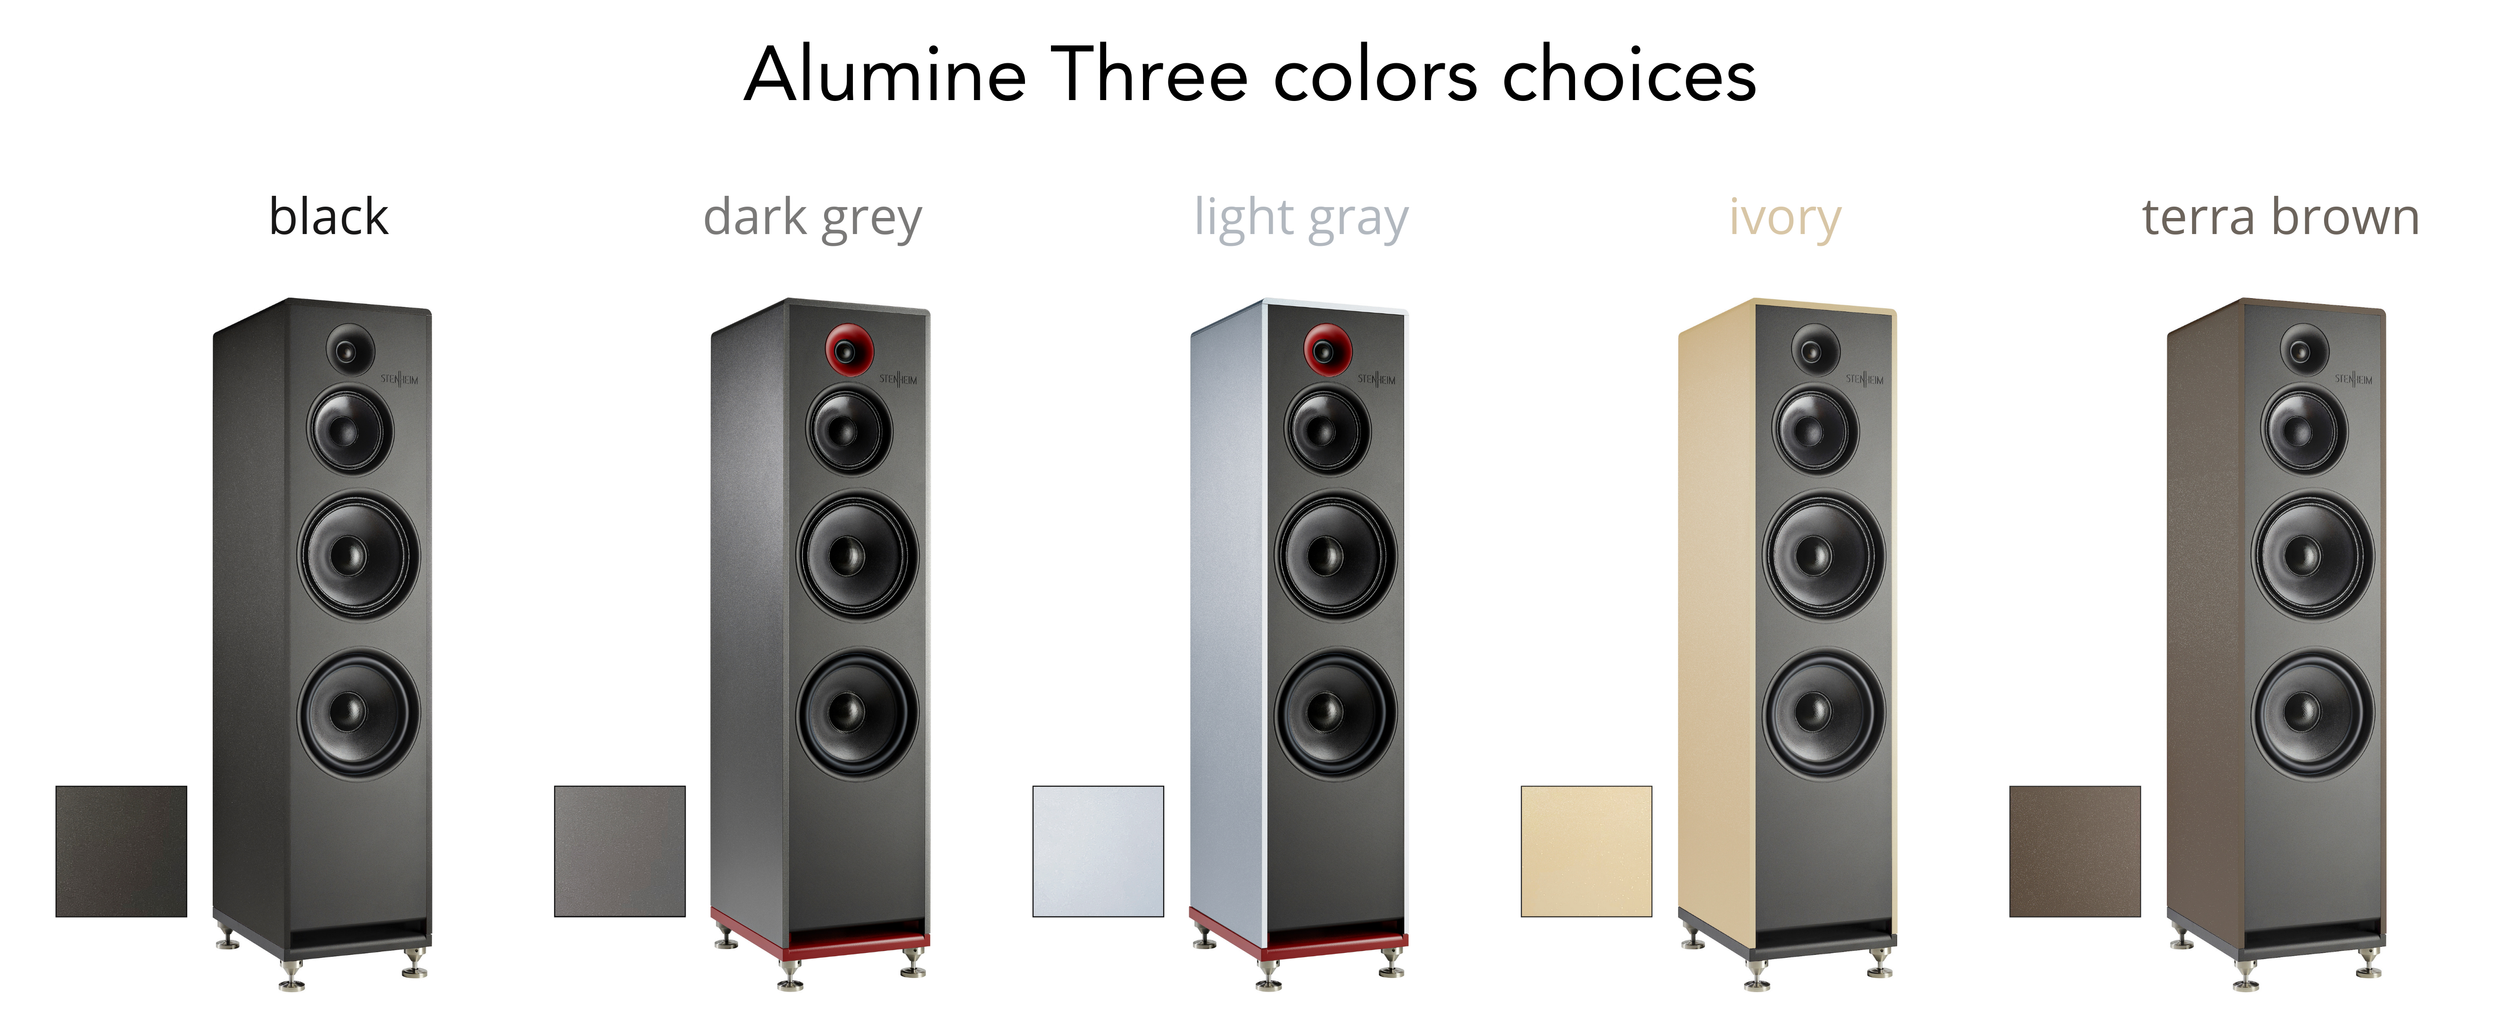 Alumine Three colors.png